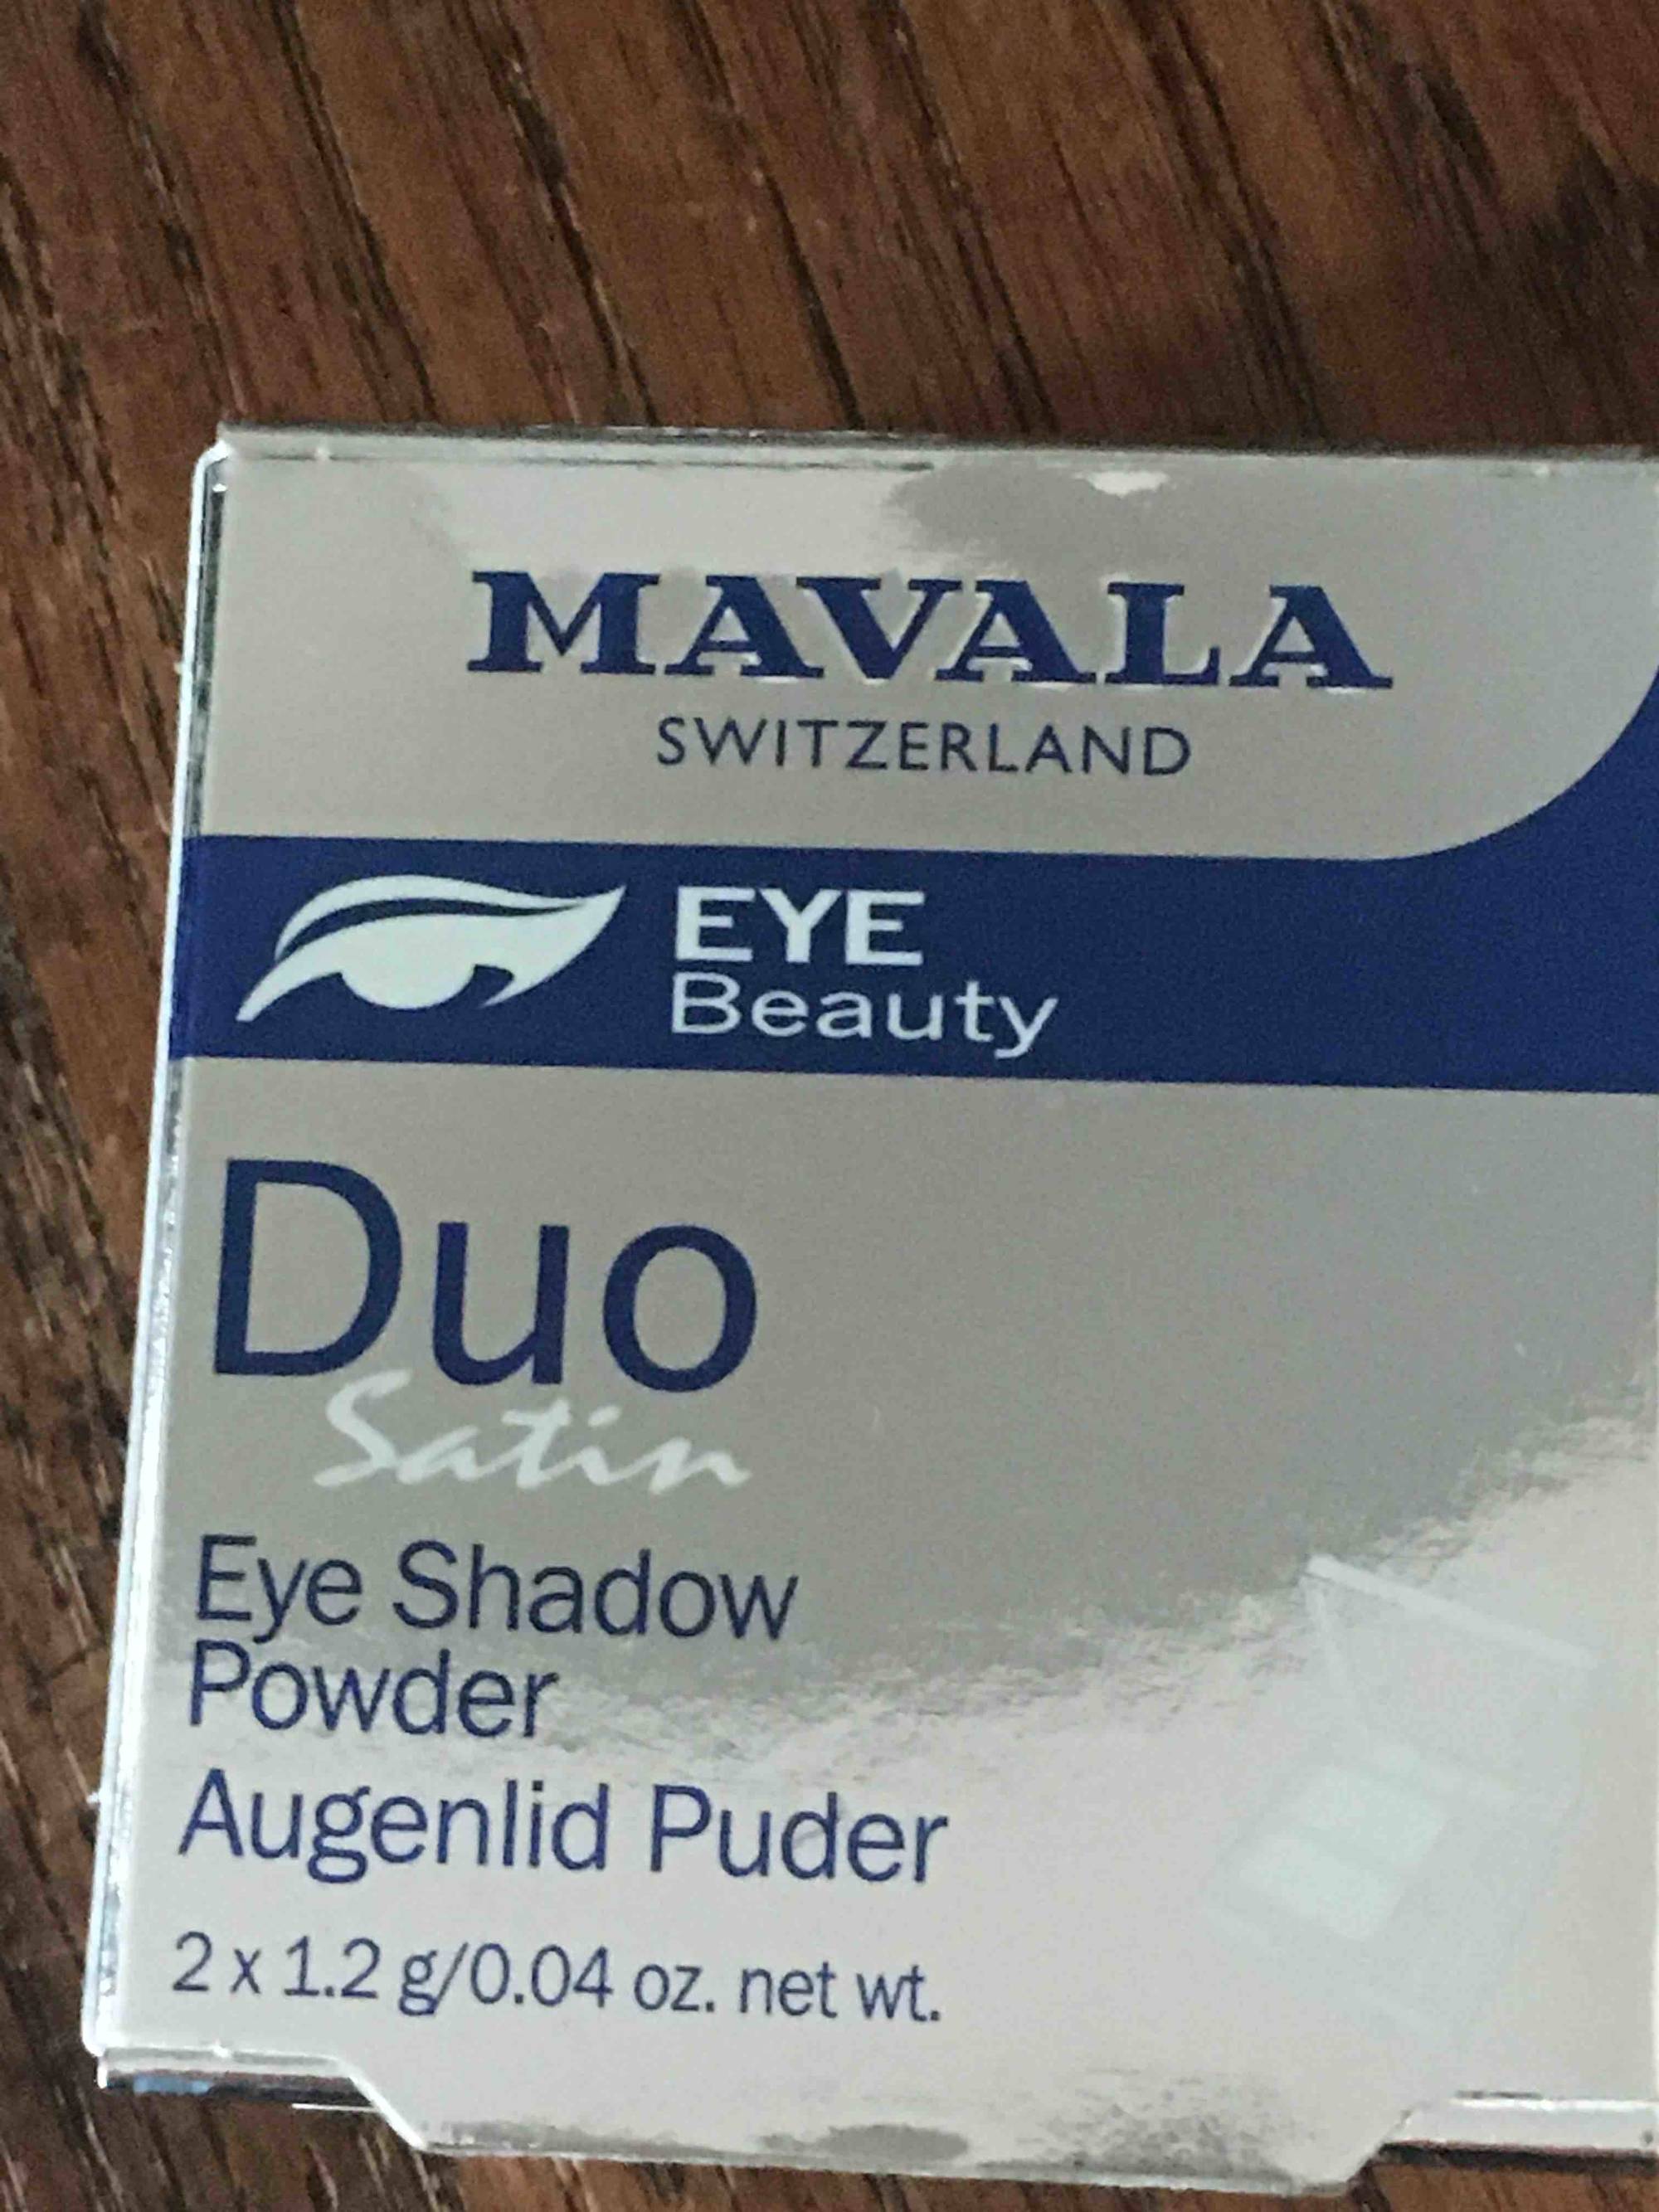 MAVALA SWITZERLAND - Eye beauty - Duo satin - Eye shadow powder